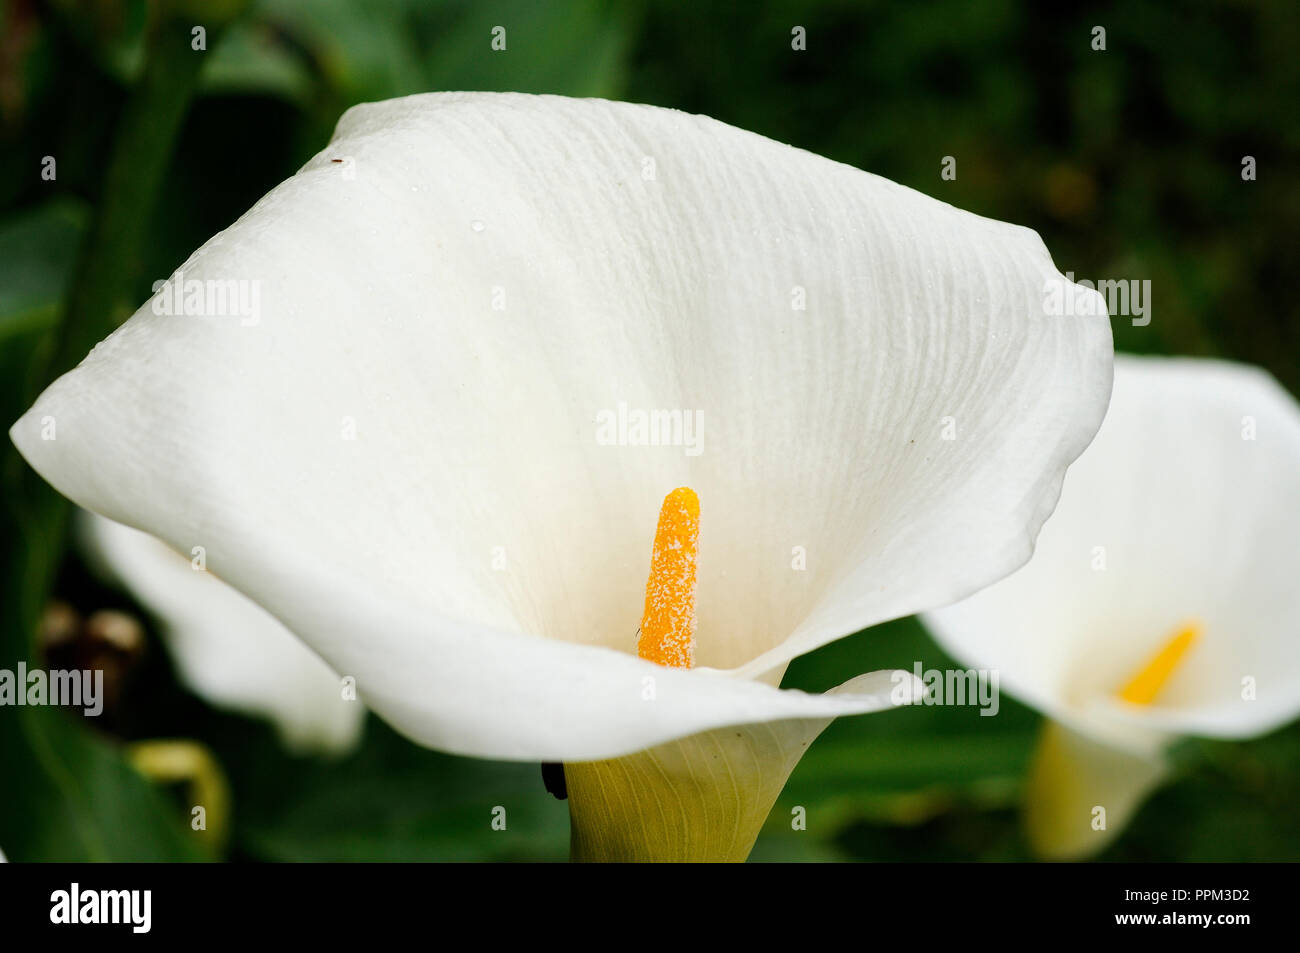 Arum lily (Jarros) Stock Photo